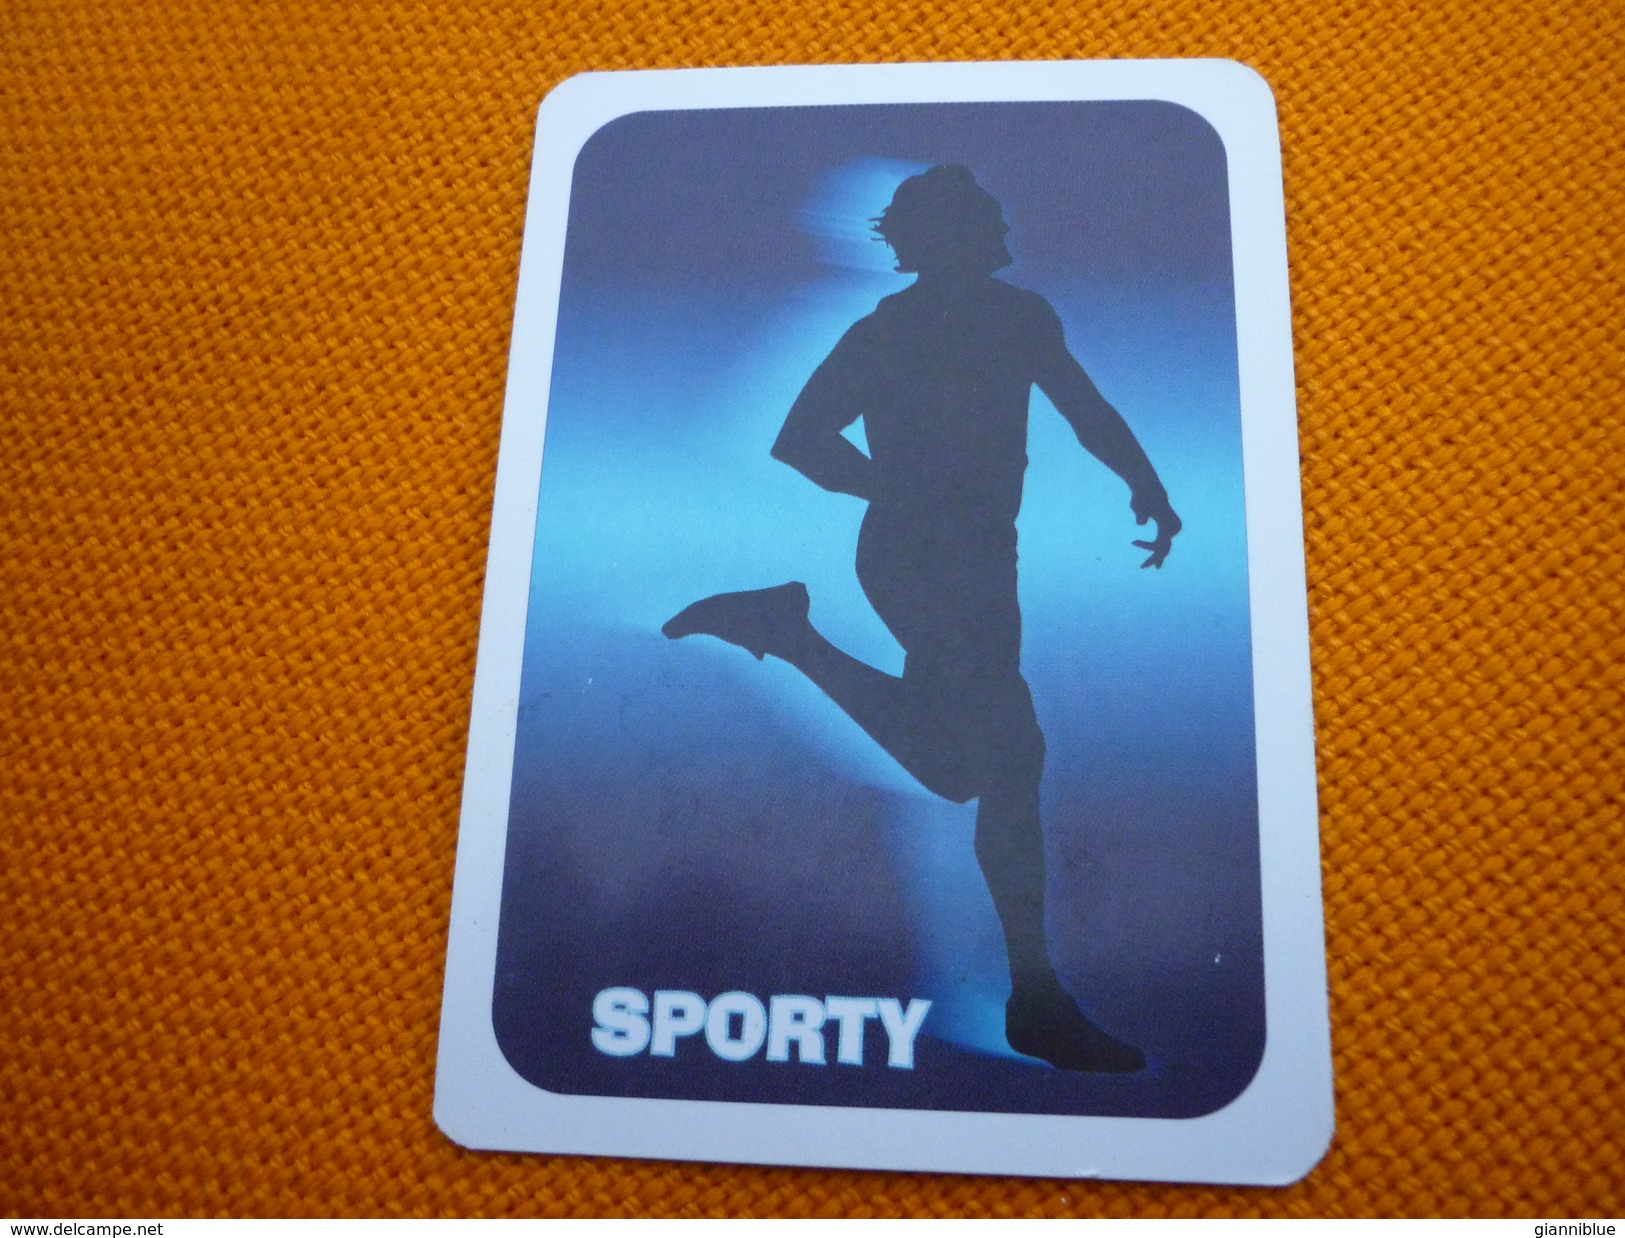 Mirela Maniani Greek Jawelin Throwing Thrower Athens 2004 Olympic Games Medalist Greece Greek Trading Card - Trading Cards